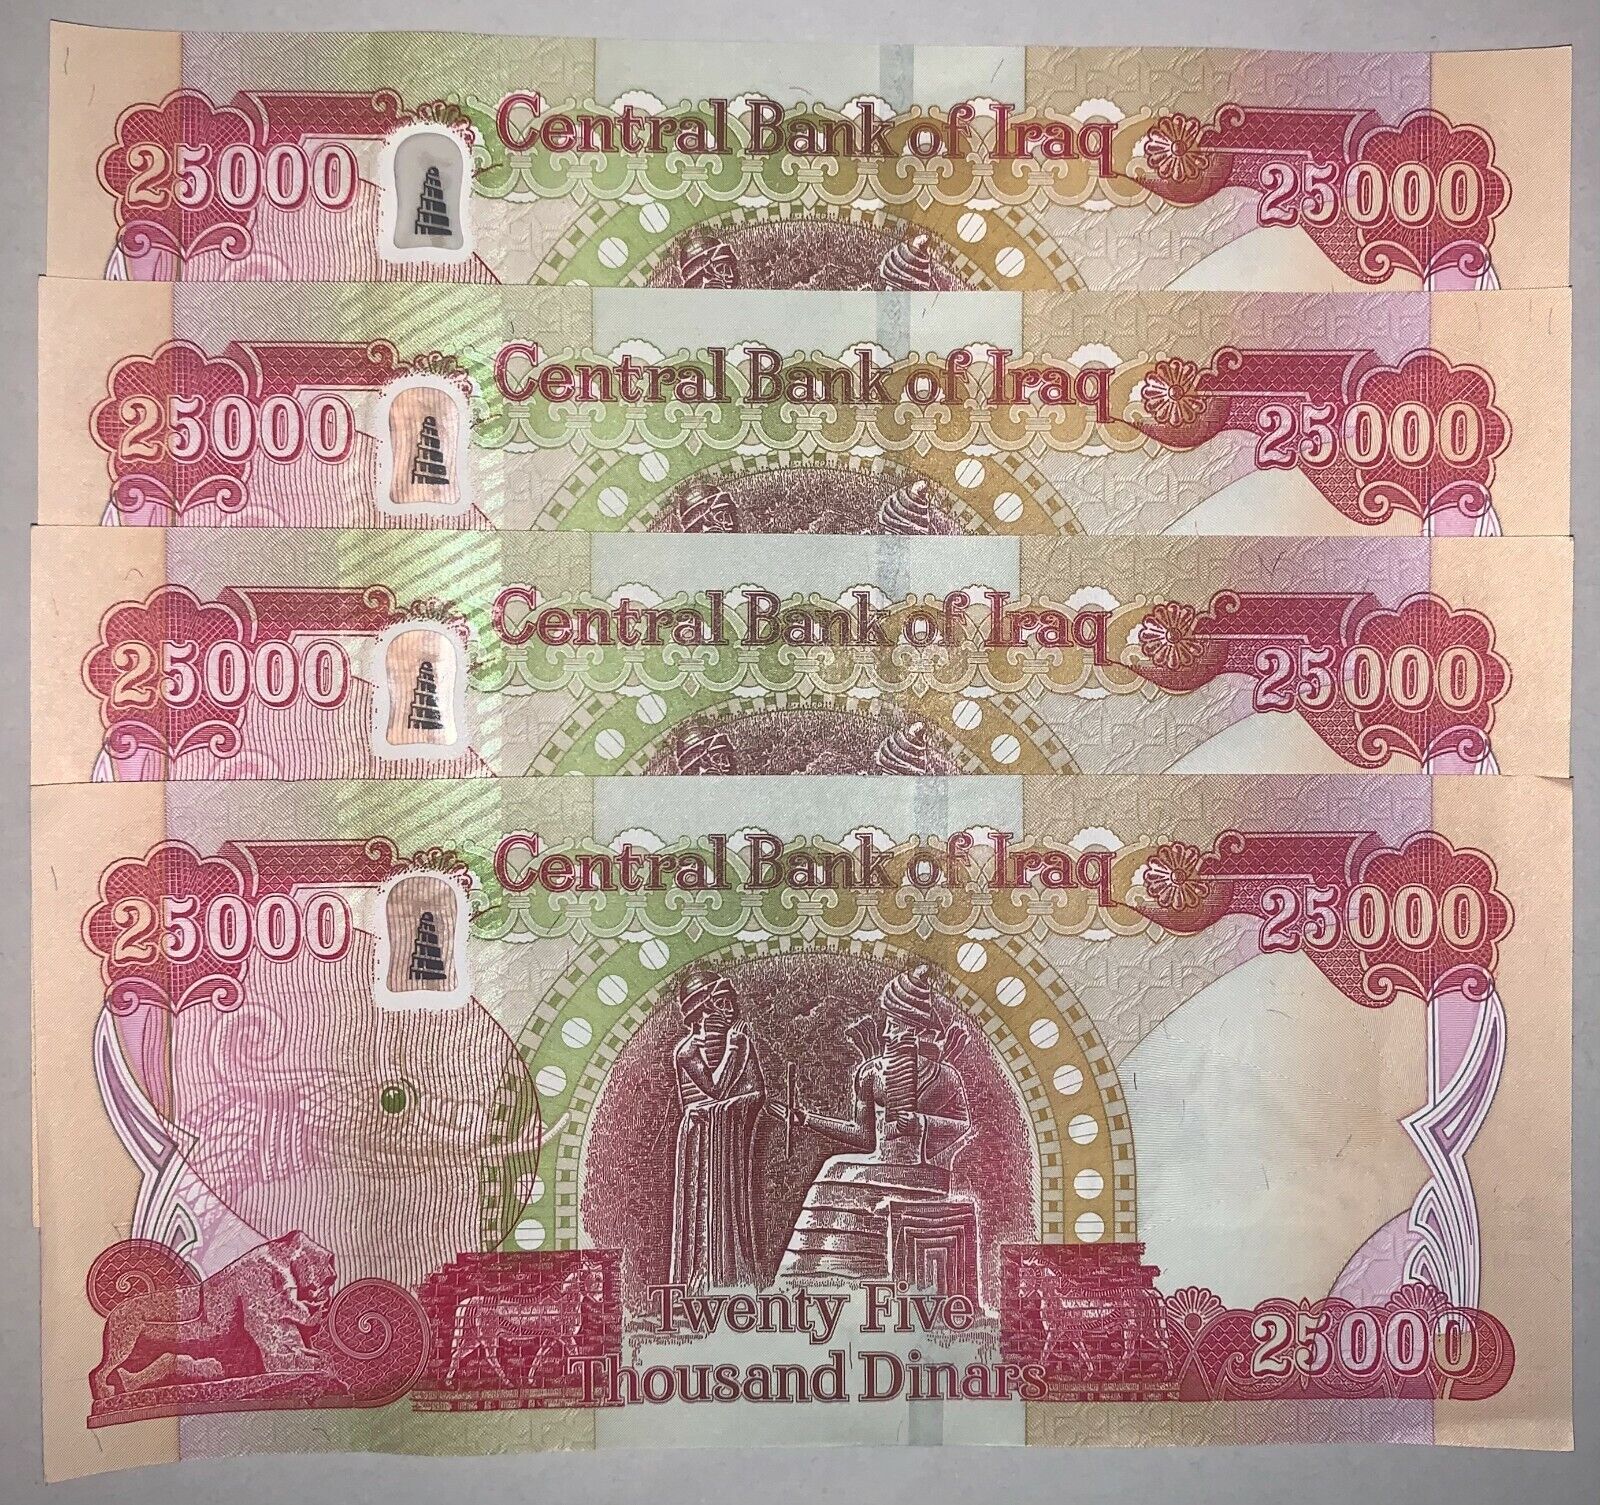 100000 New Iraqi Money 100K IQD Dinars (1/10 MILLION) 2020+ UNC  (FREE SHIPPING)